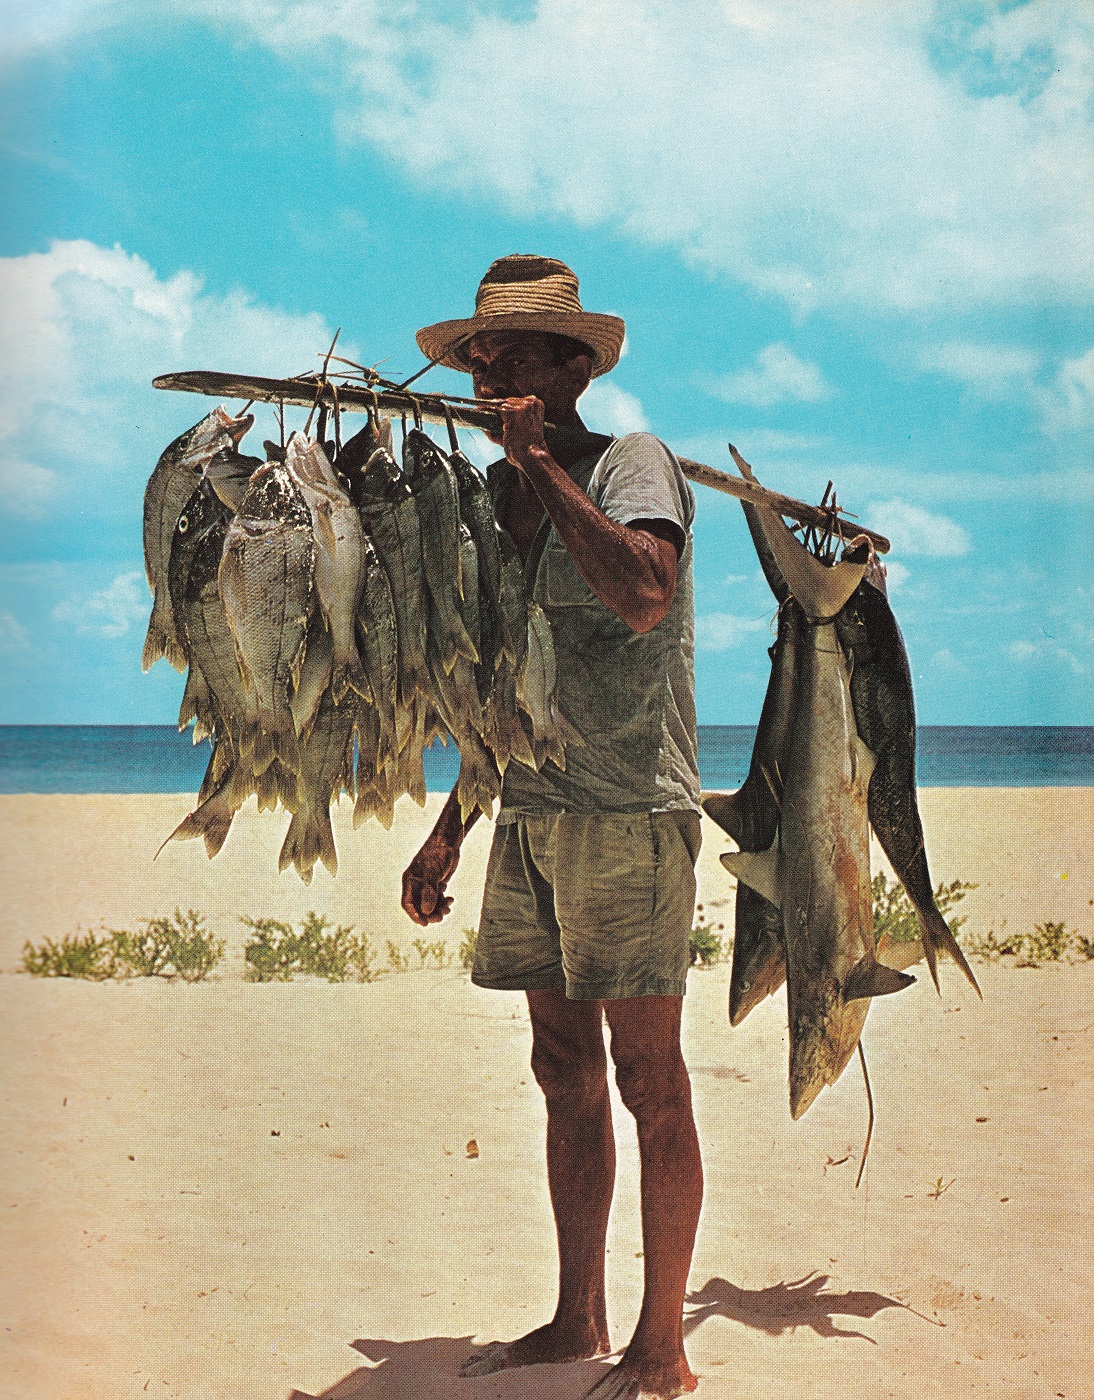 File:Fisherman and his catch Seychelles.jpg - Wikipedia